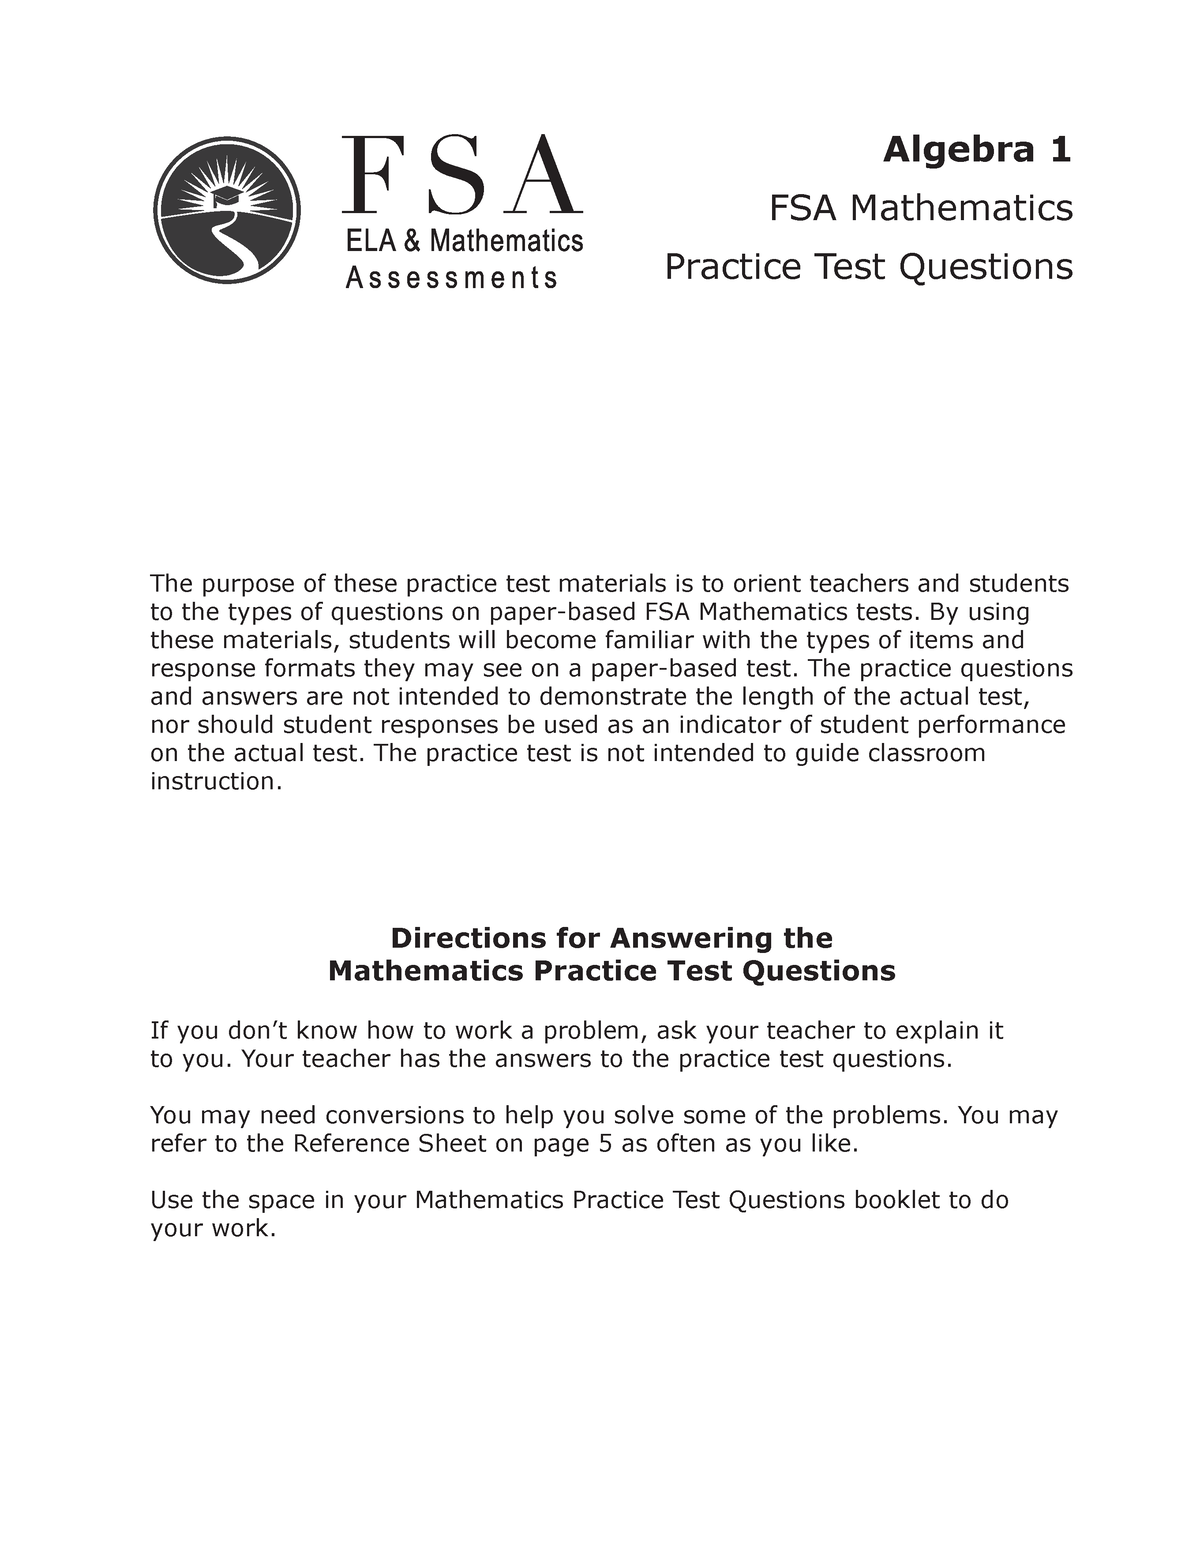 fsa-2020-alg1-practice-test-algebra-1-fsa-mathematics-practice-test